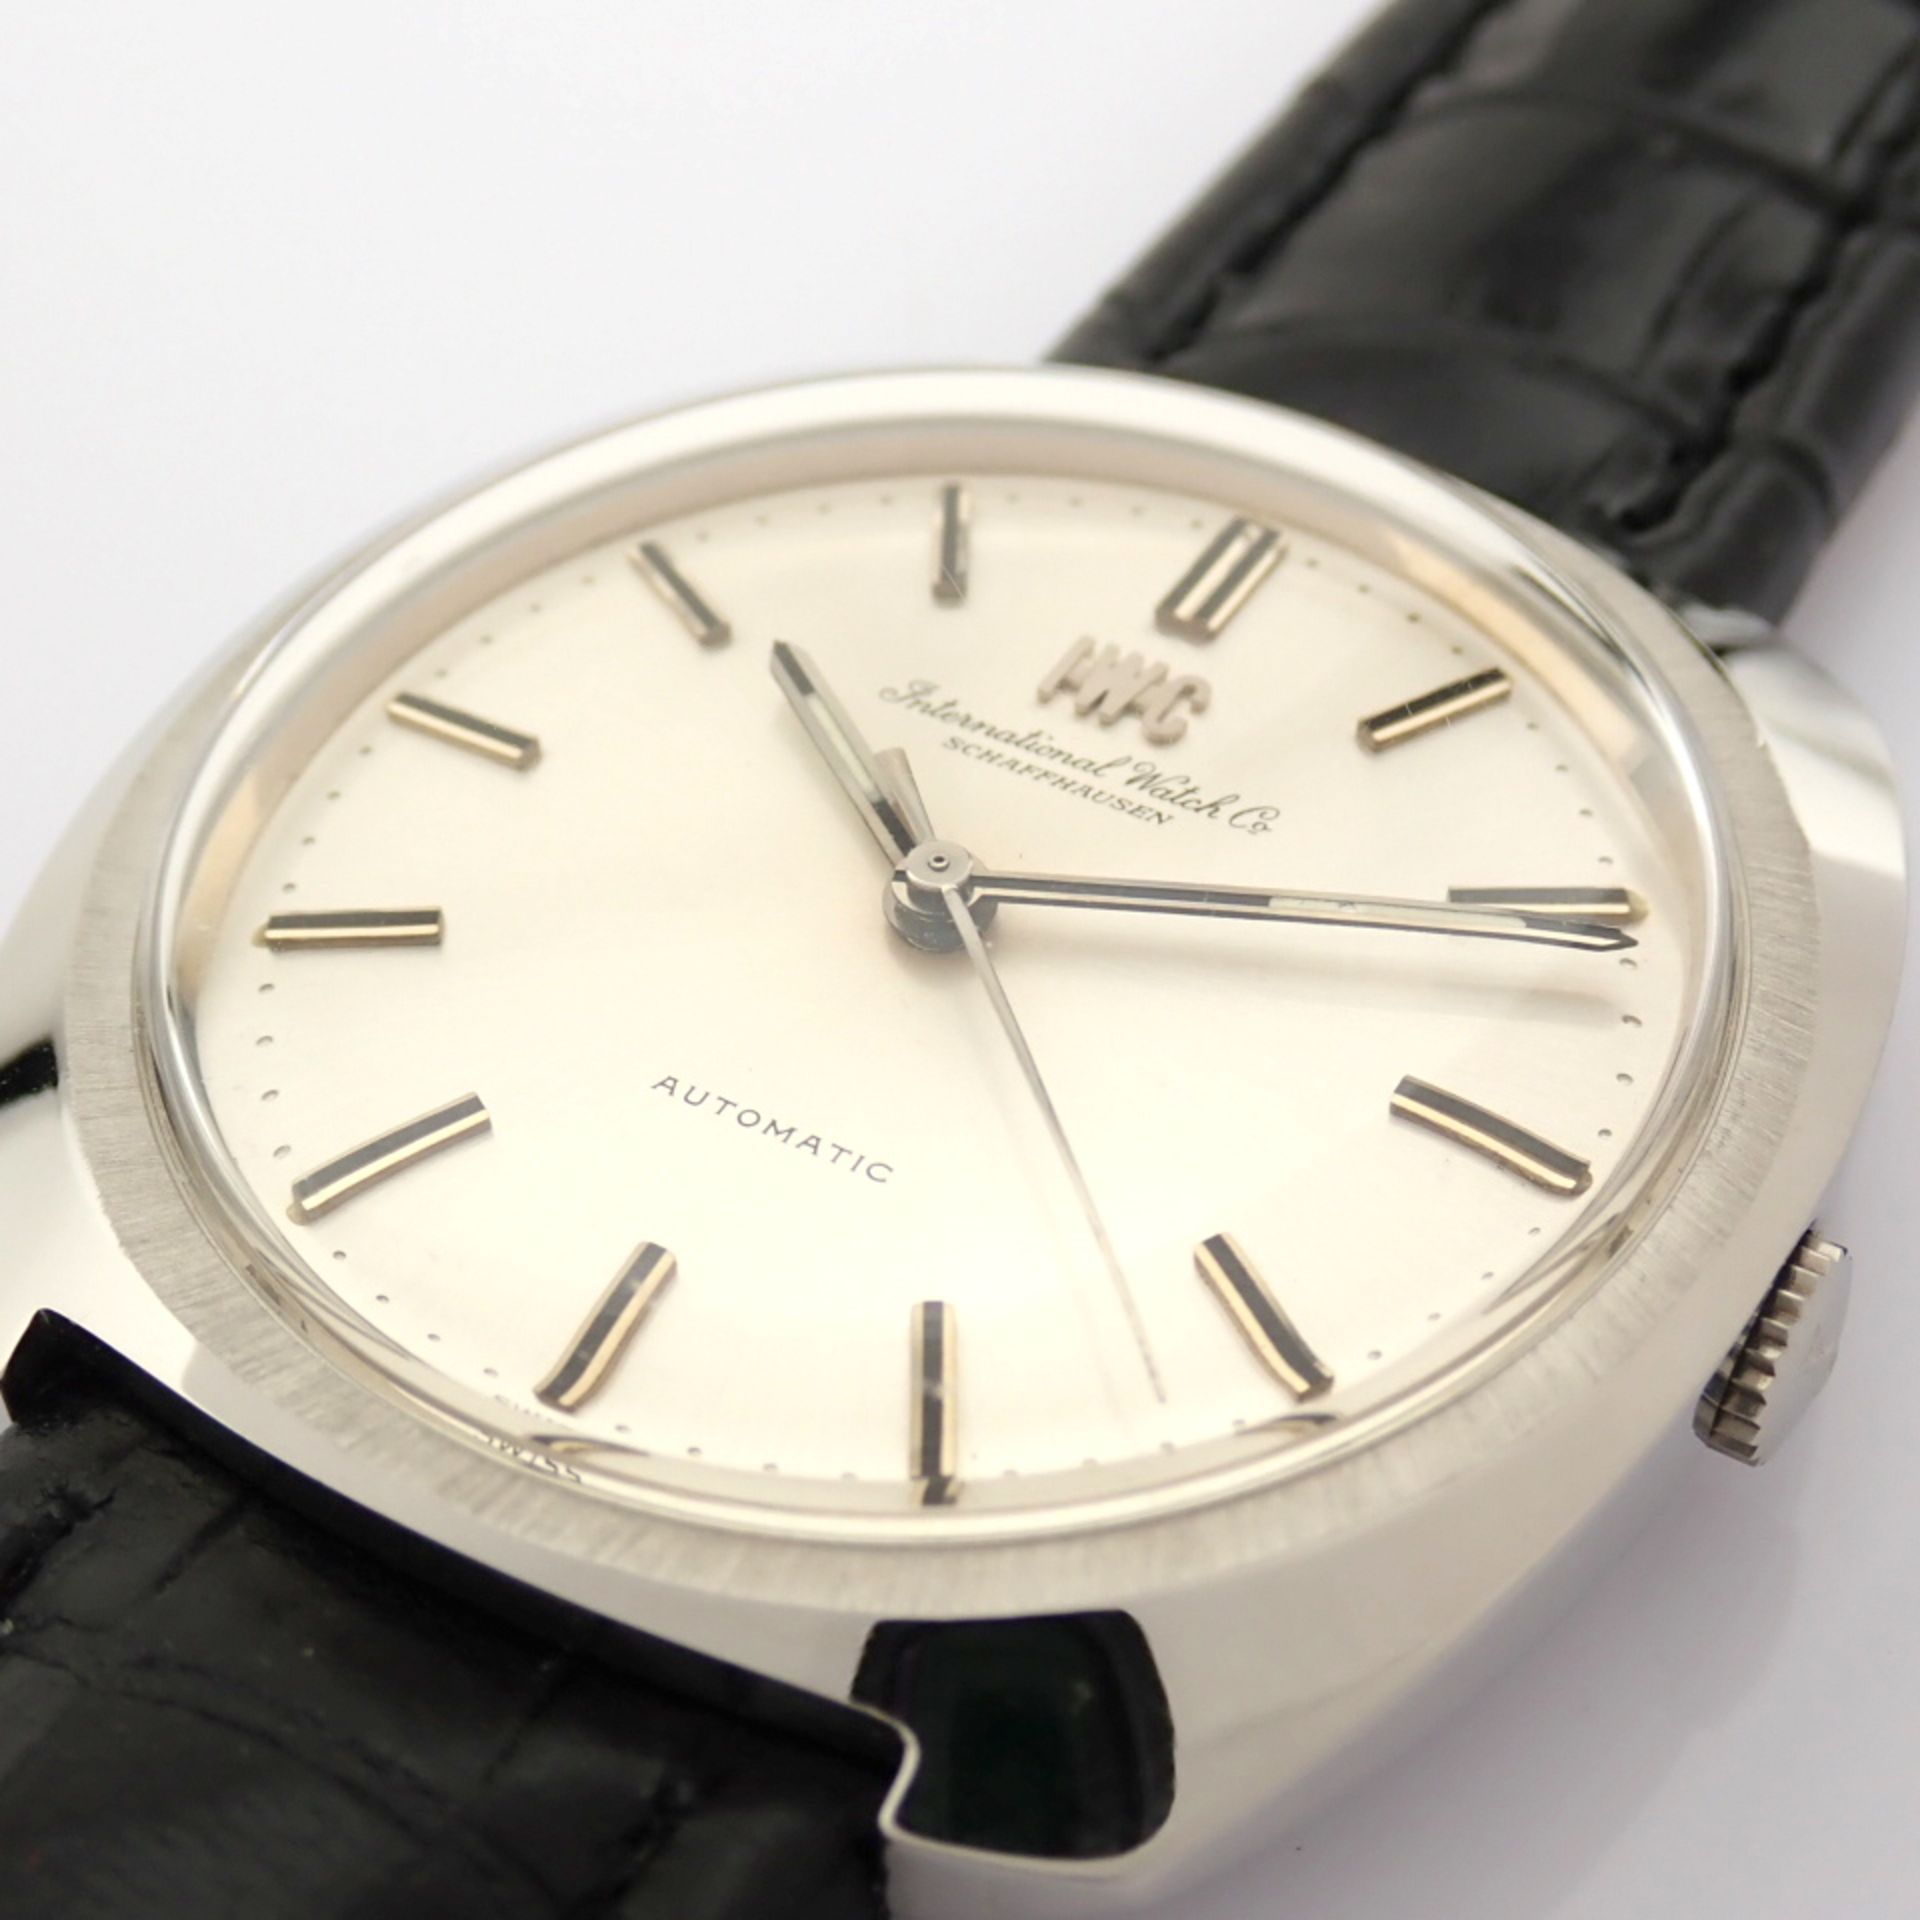 IWC / Pellaton (Rare) - Gentlmen's Gold-filled Wrist Watch - Image 10 of 14